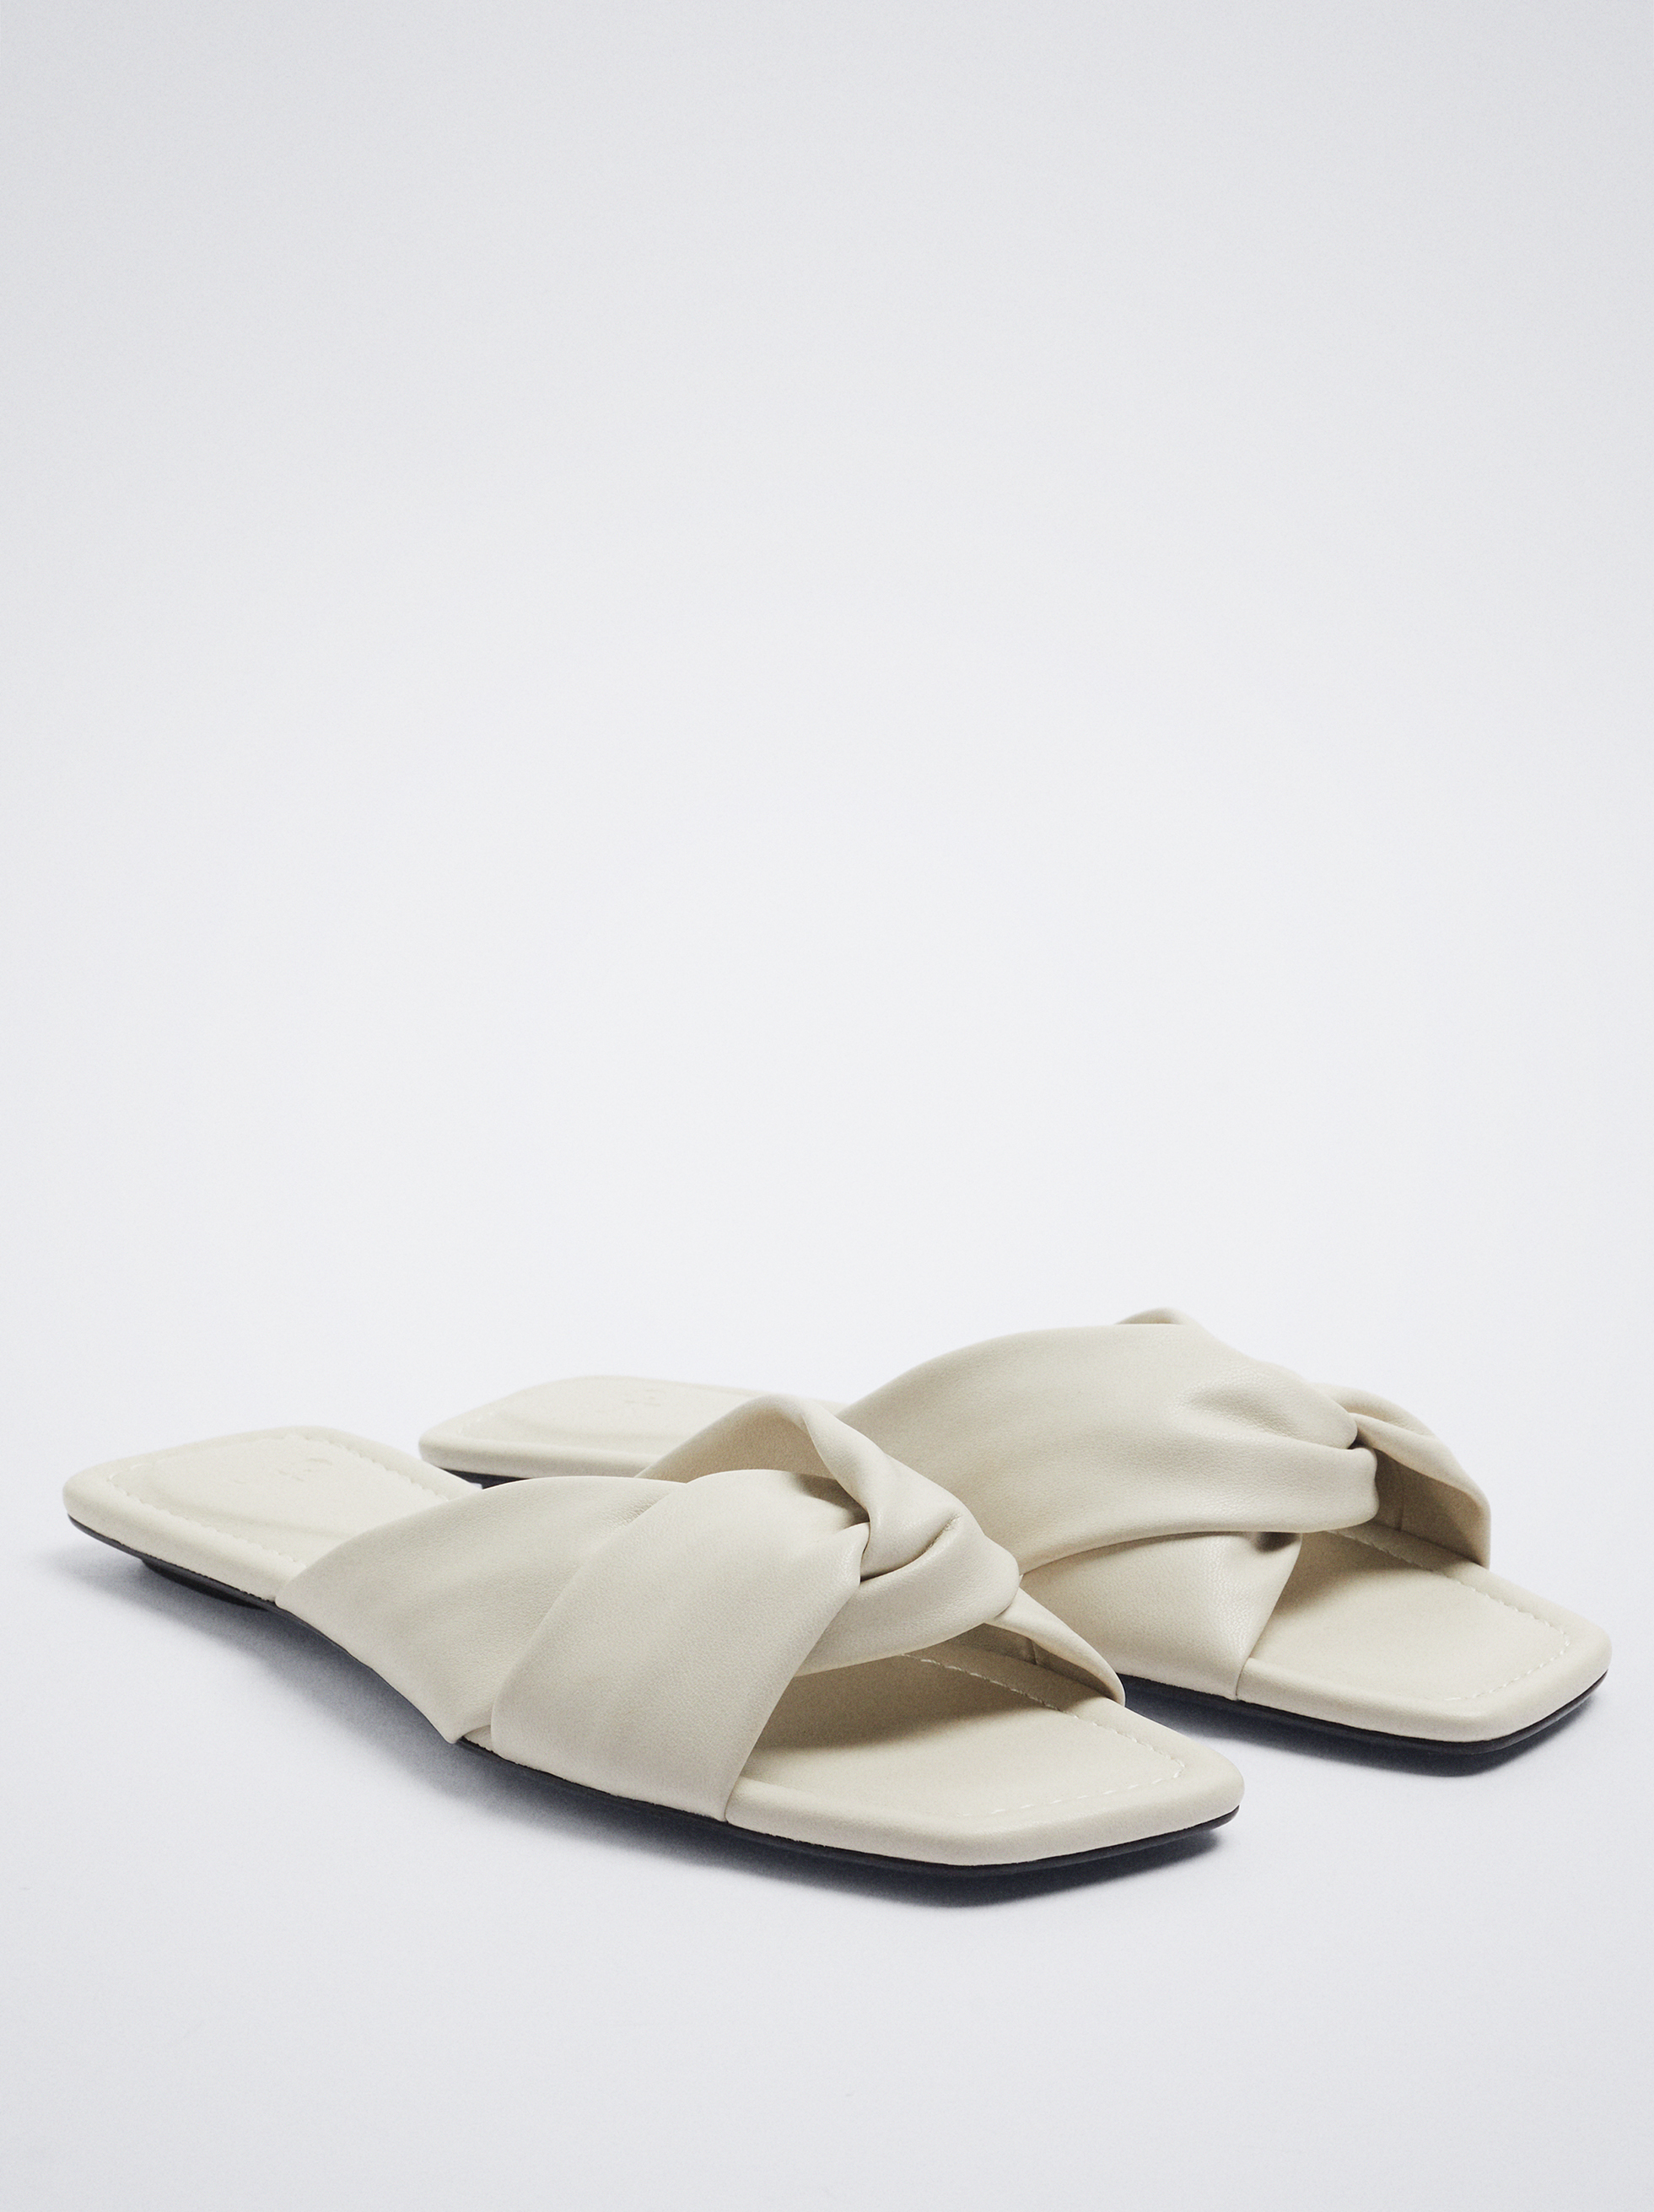 Sandalias planas con nudo de Parfois por 25,99 euros.